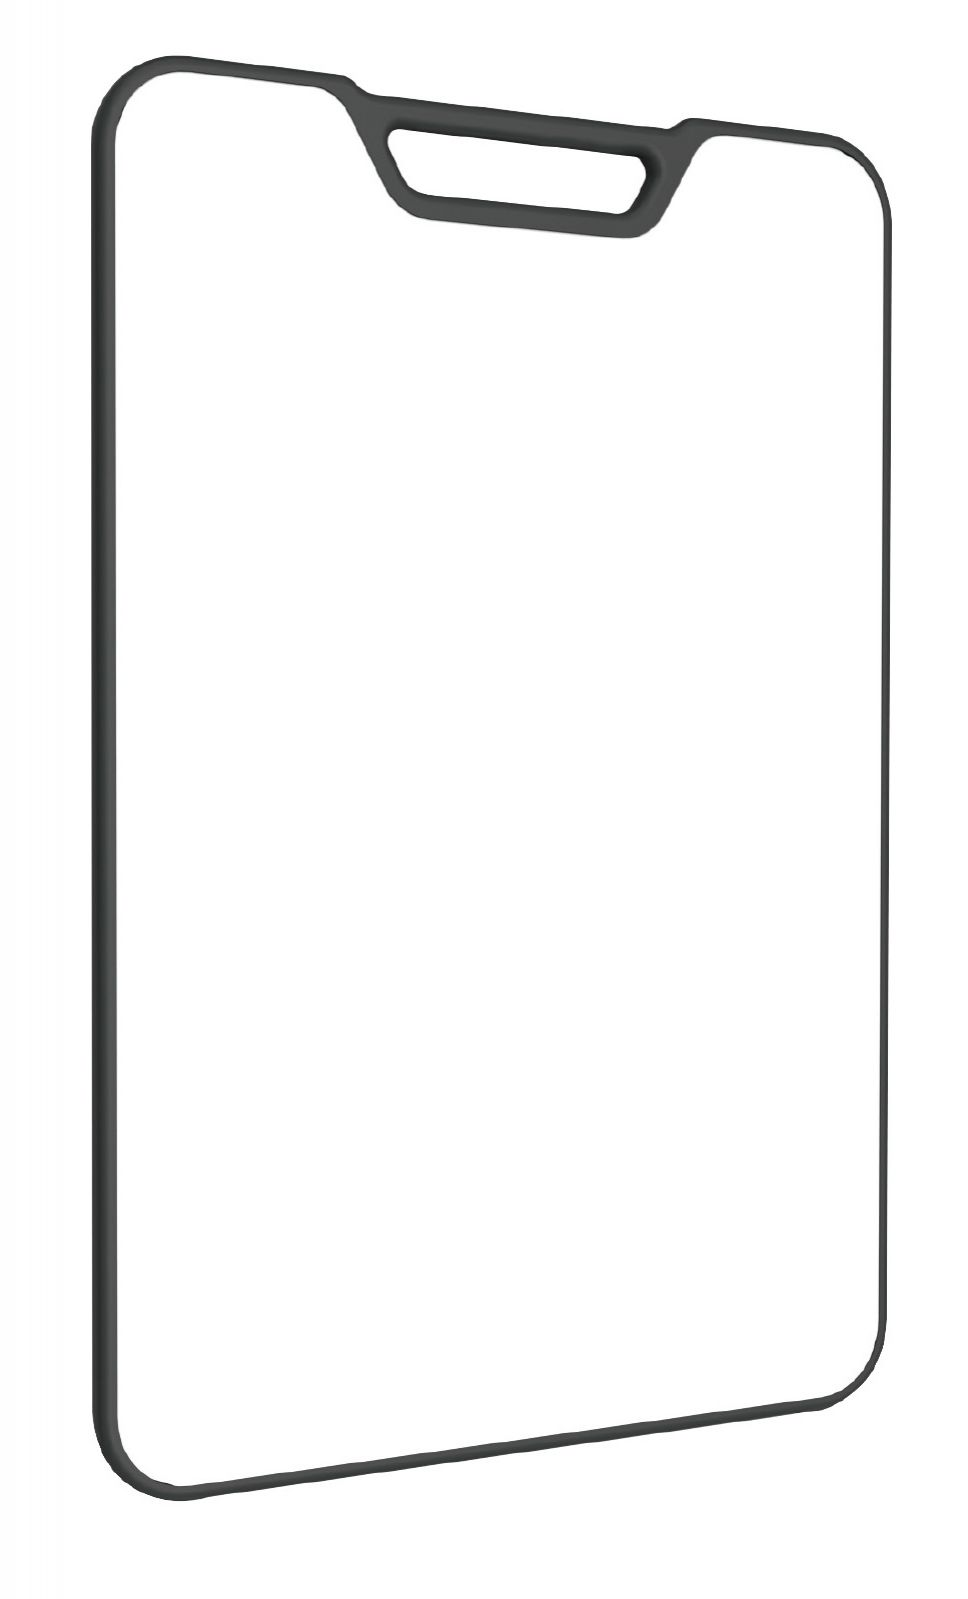 AGILE Mobile Tablet Whiteboard single